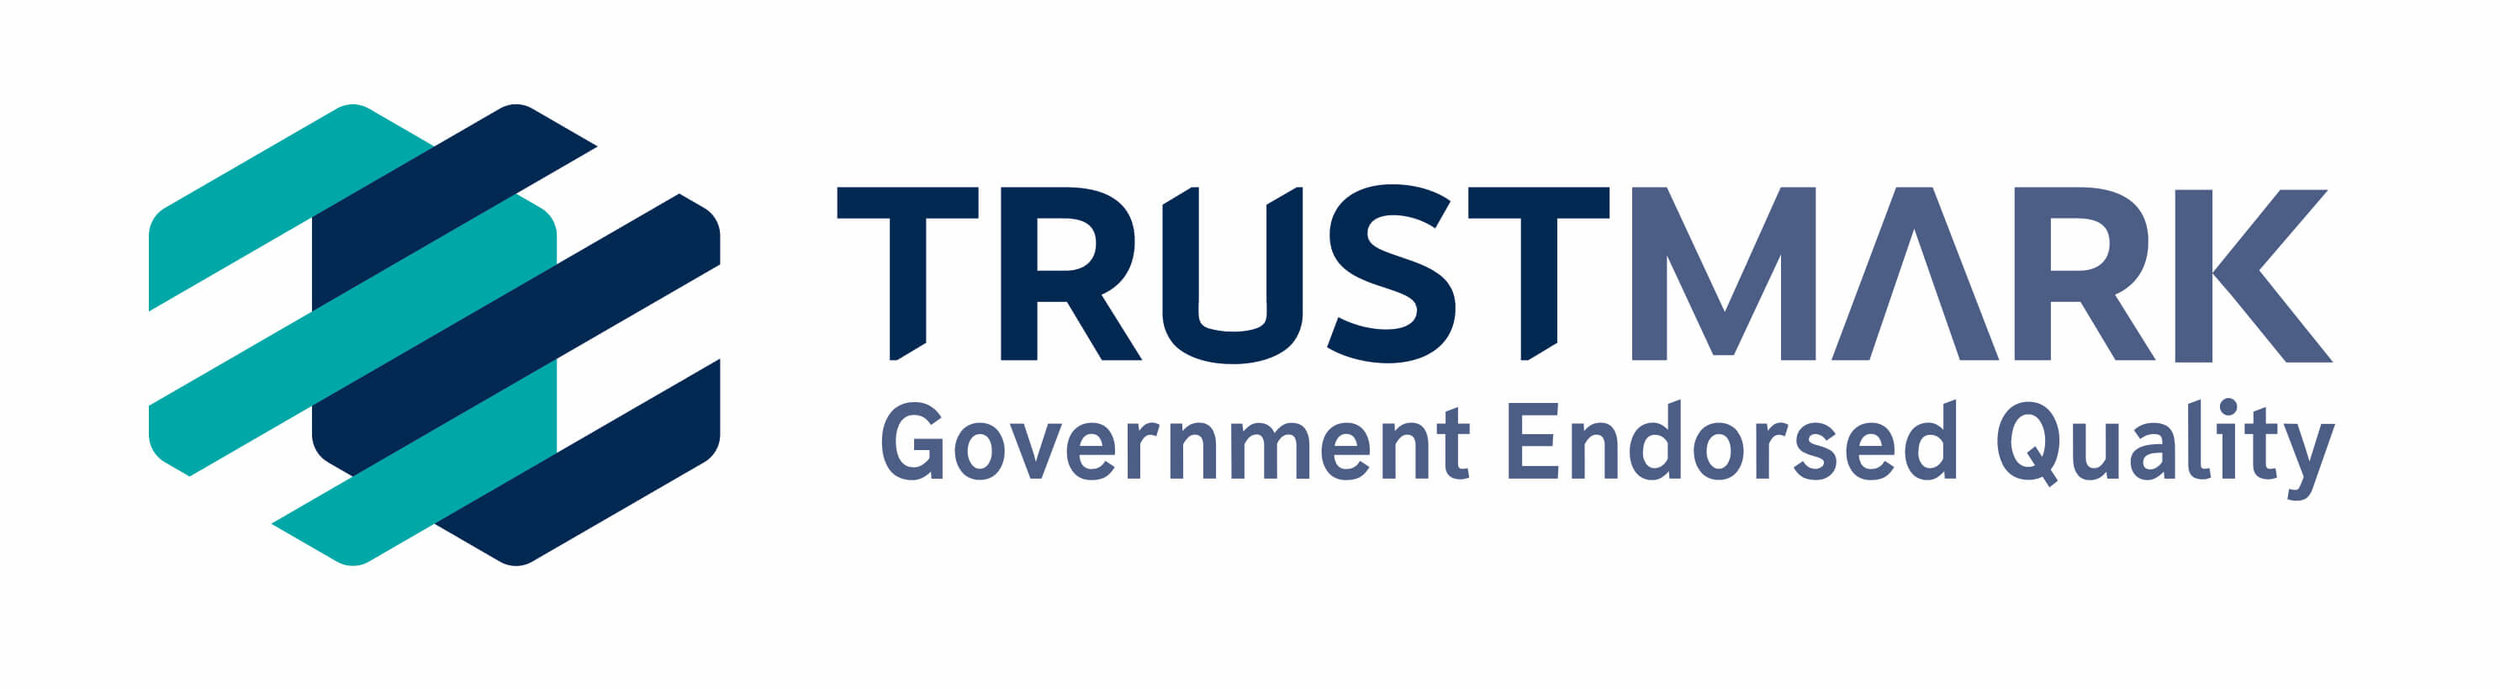 trustmark-logo-rgb.jpg